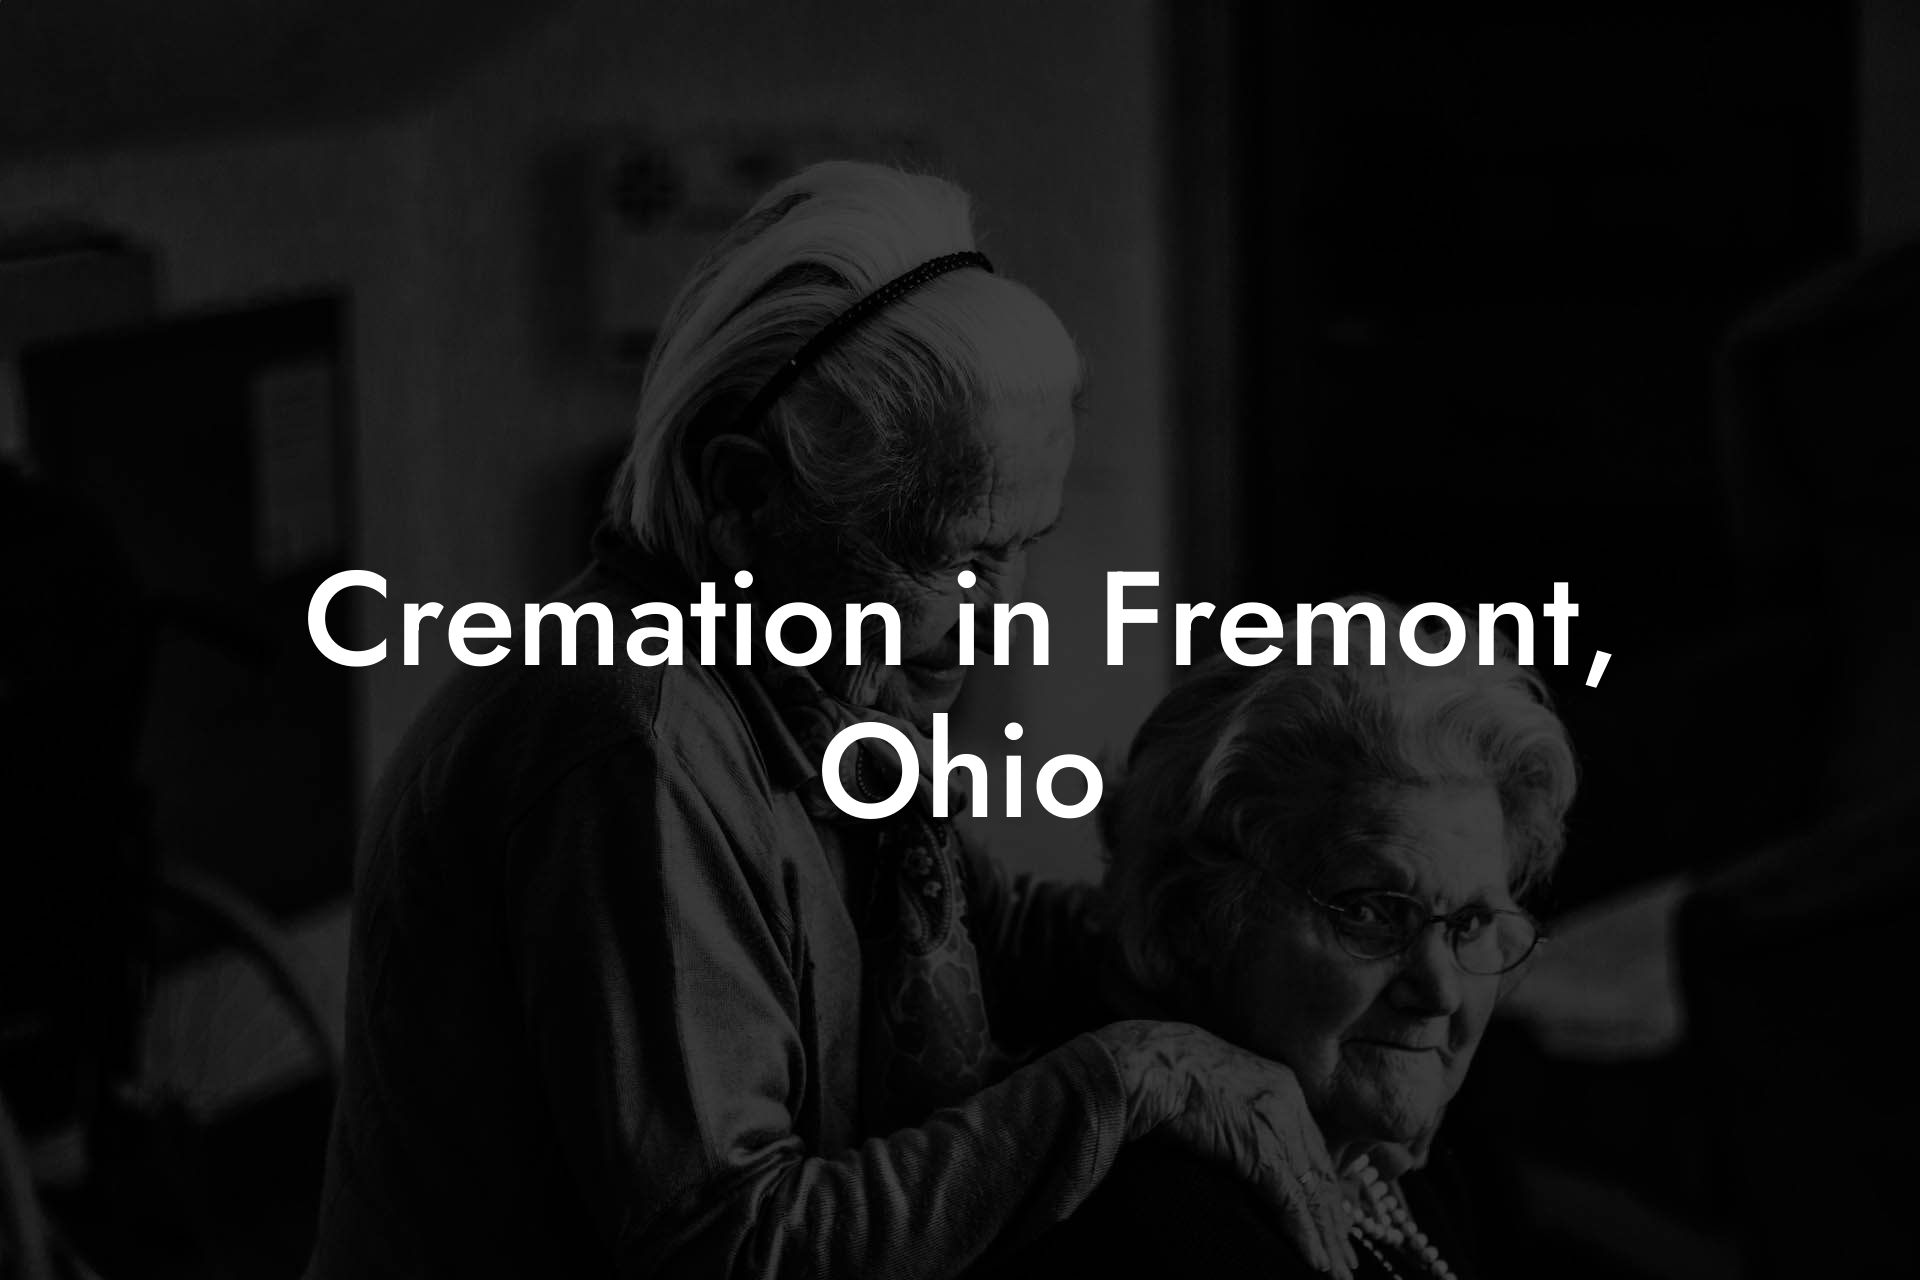 Cremation in Fremont, Ohio